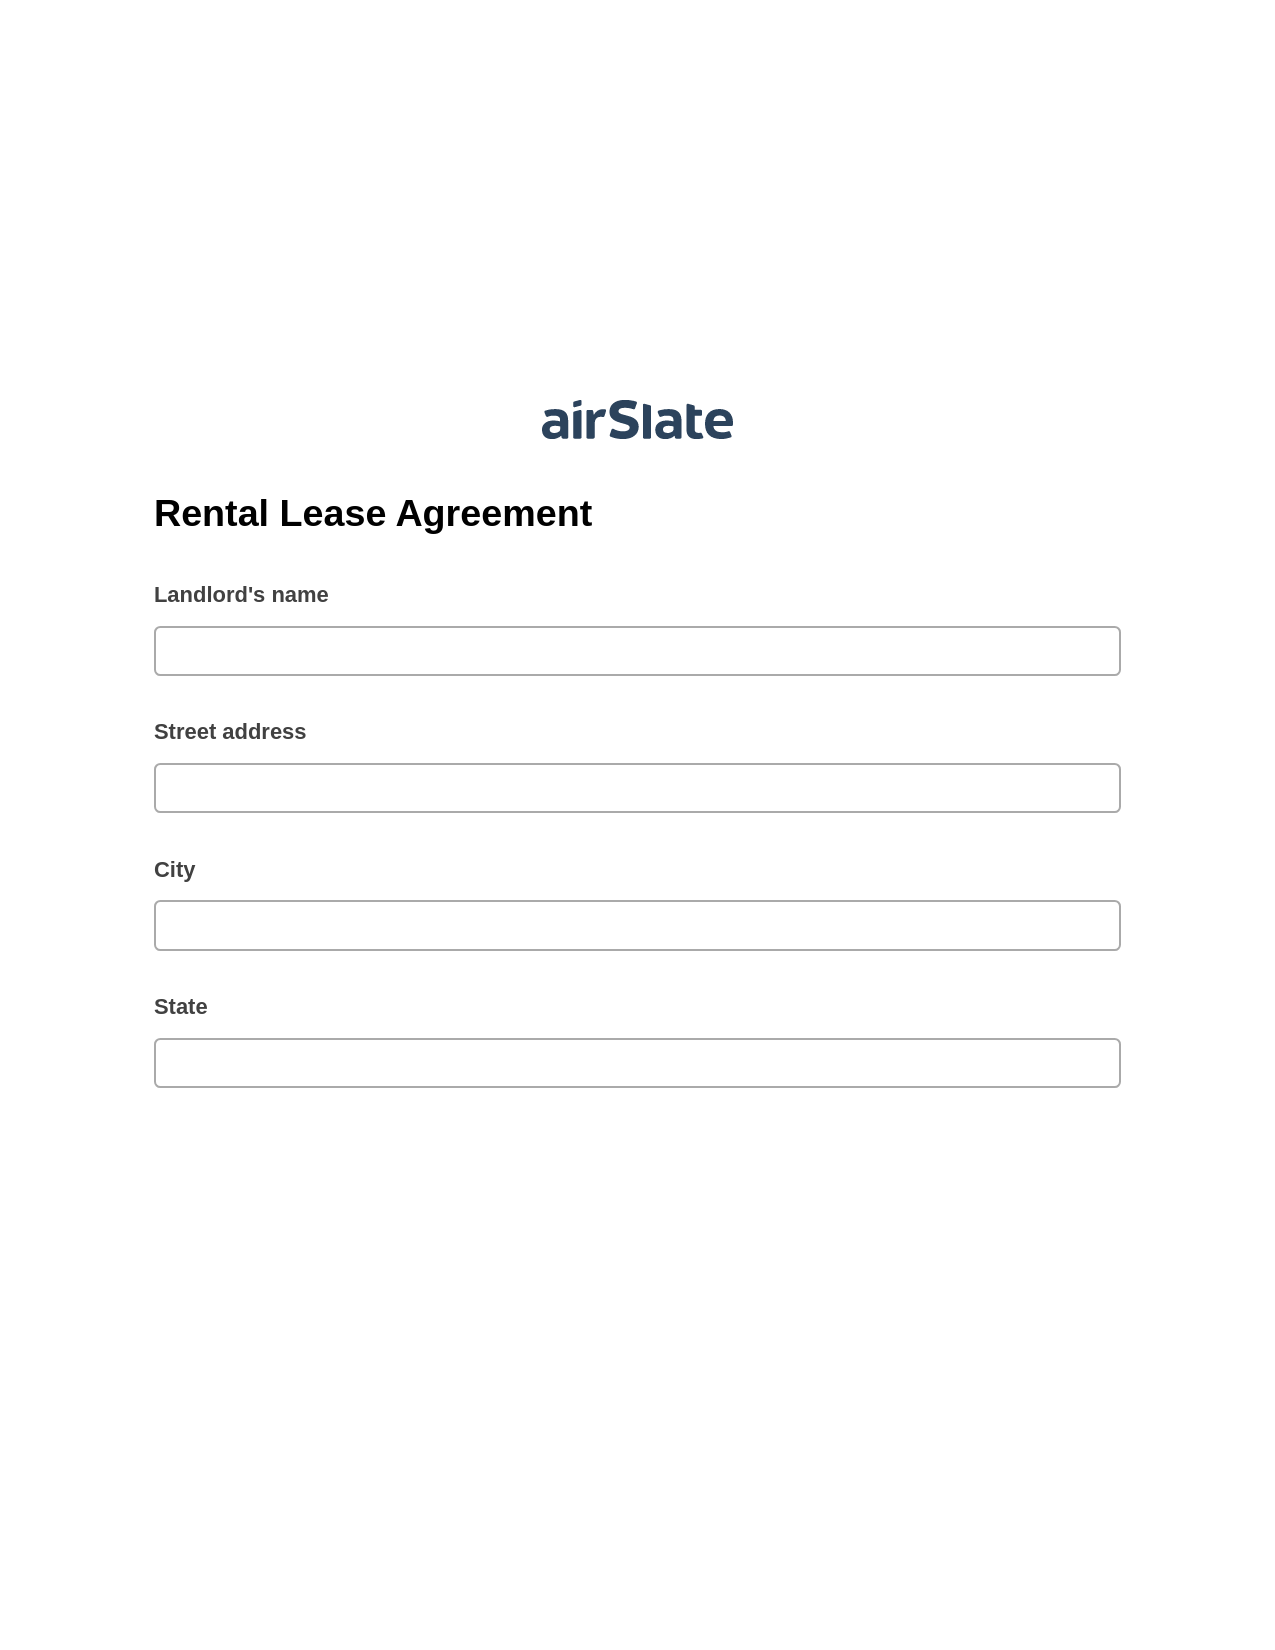 Rental Lease Agreement Pre-fill from Litmos bot, Invoke Salesforce Process Bot, Export to Smartsheet